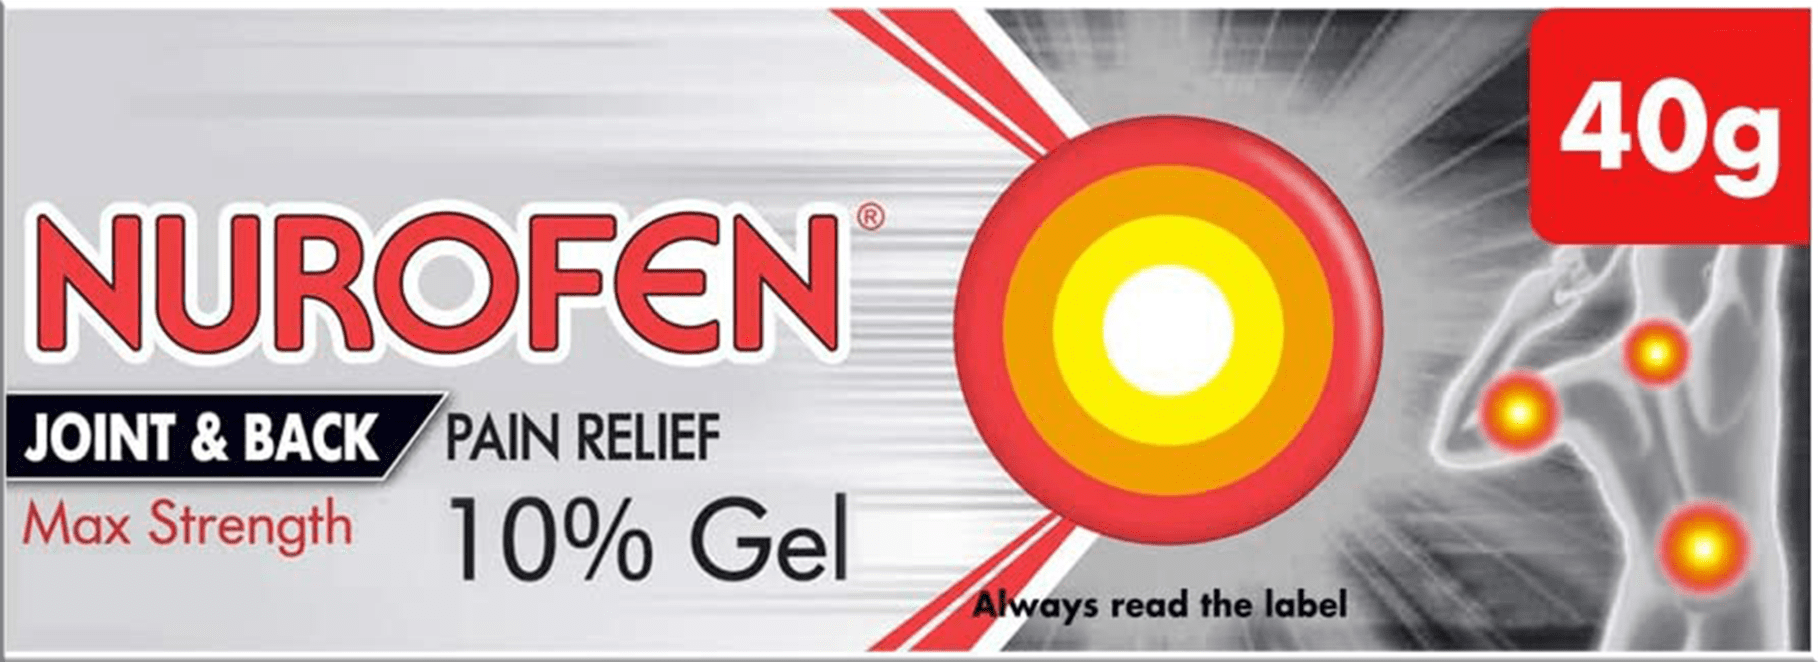 Nurofen Joint & Back Pain Relief Max Strength 10% Gel - 40g